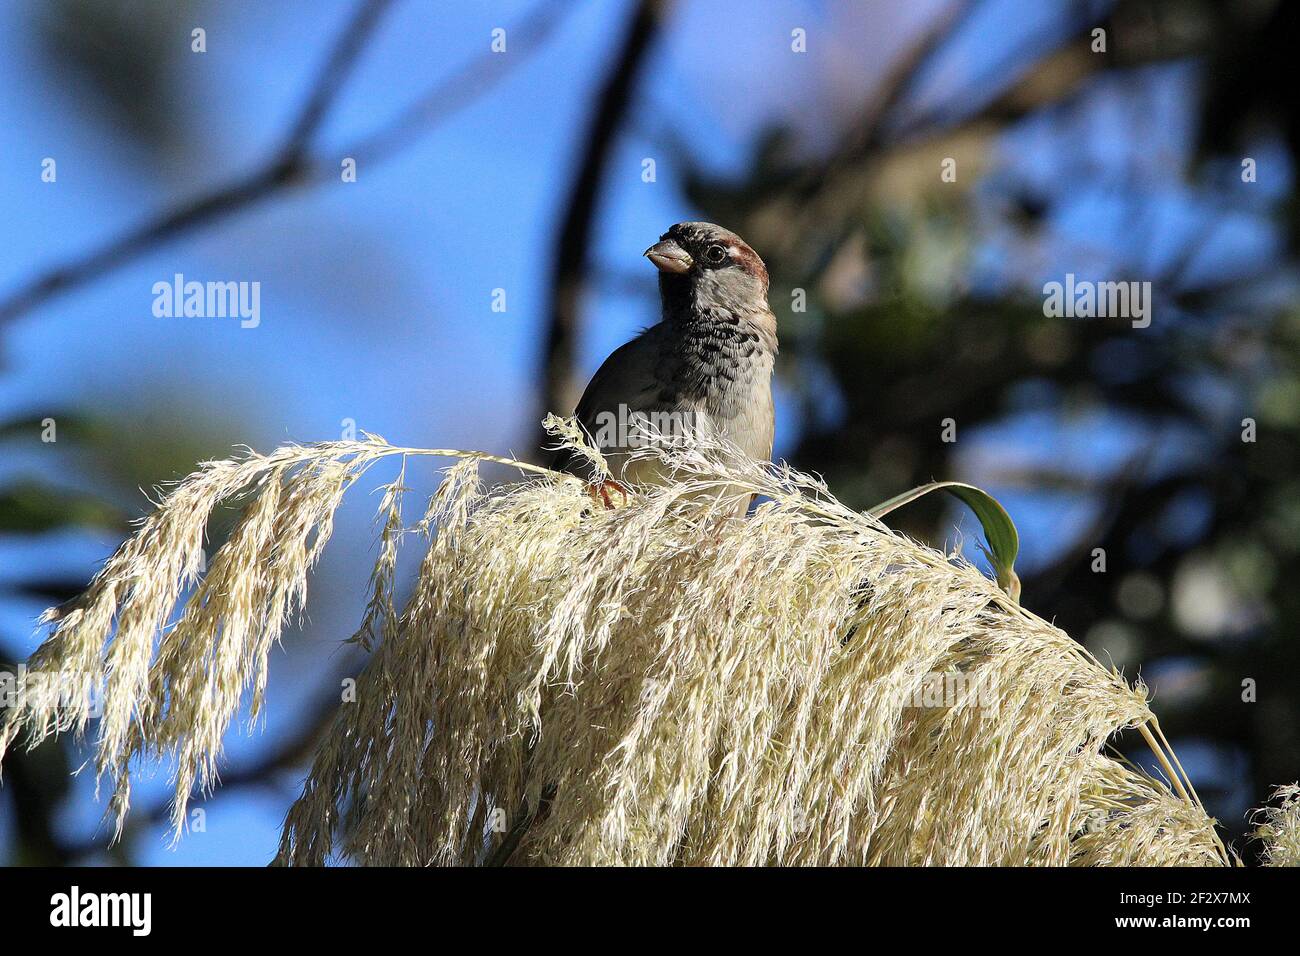 Male house sparrow feeding on pampas grass seedhead Stock Photo